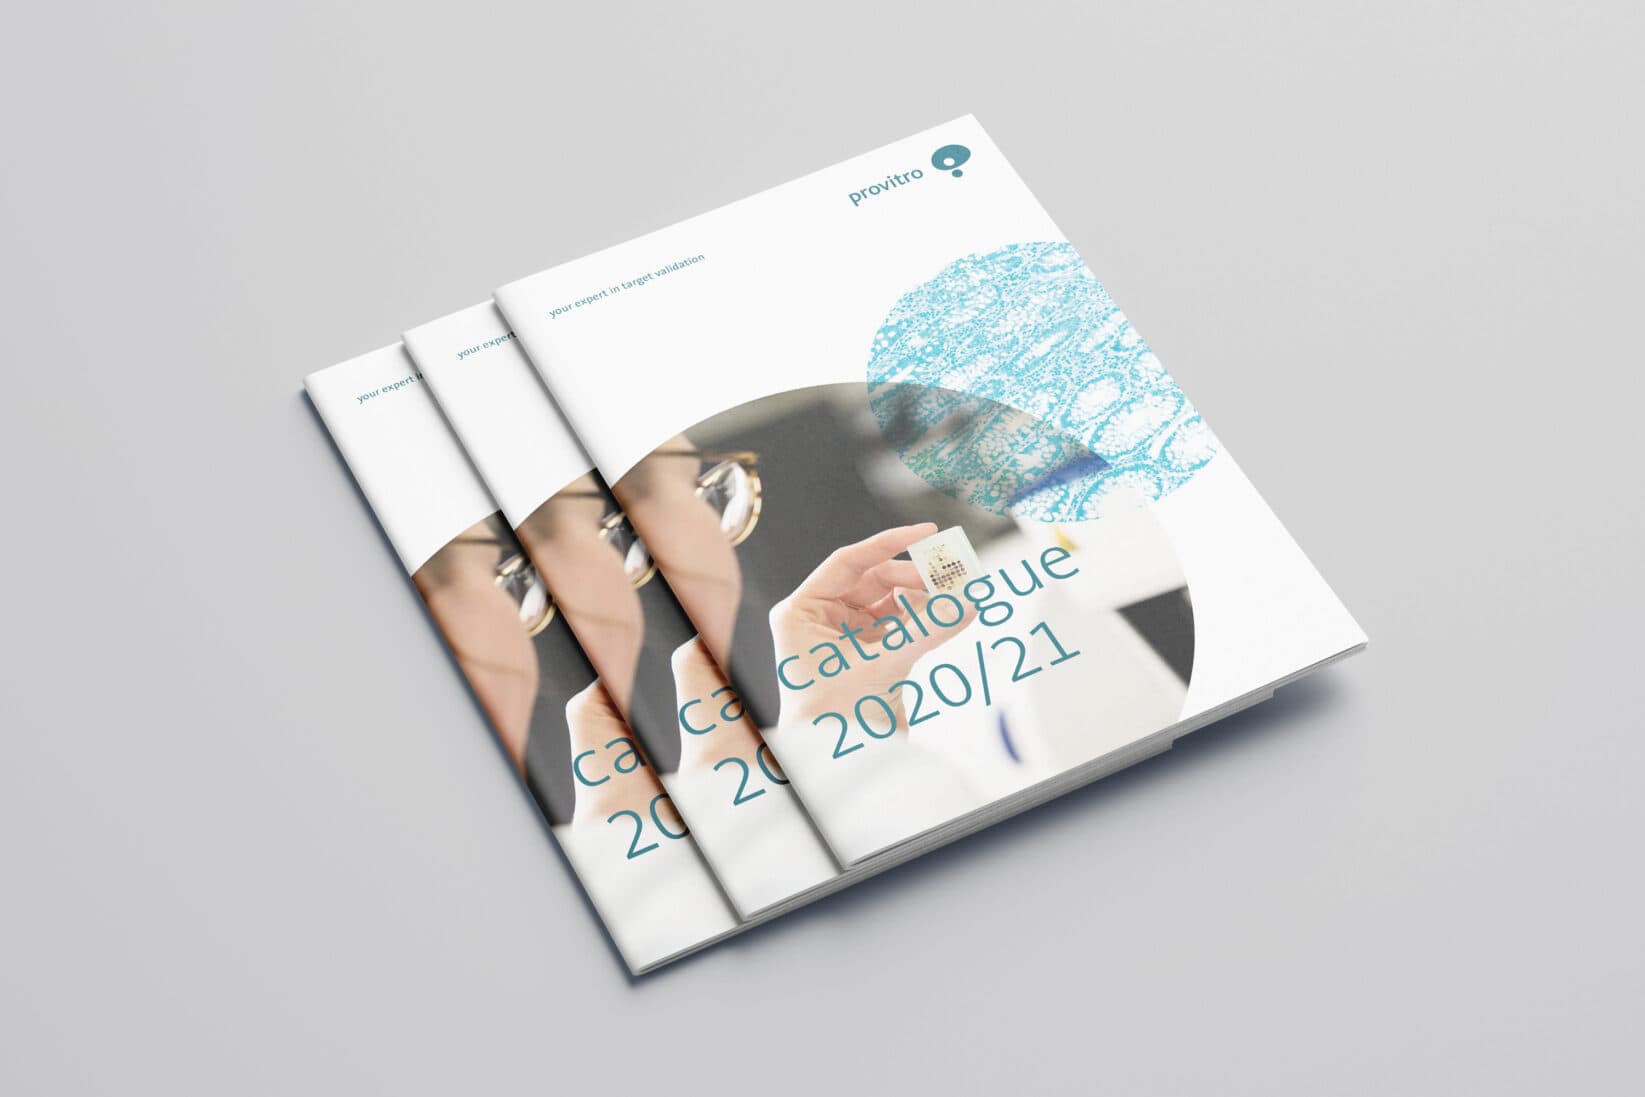 provitro Corporate Design Katalog 2020/21